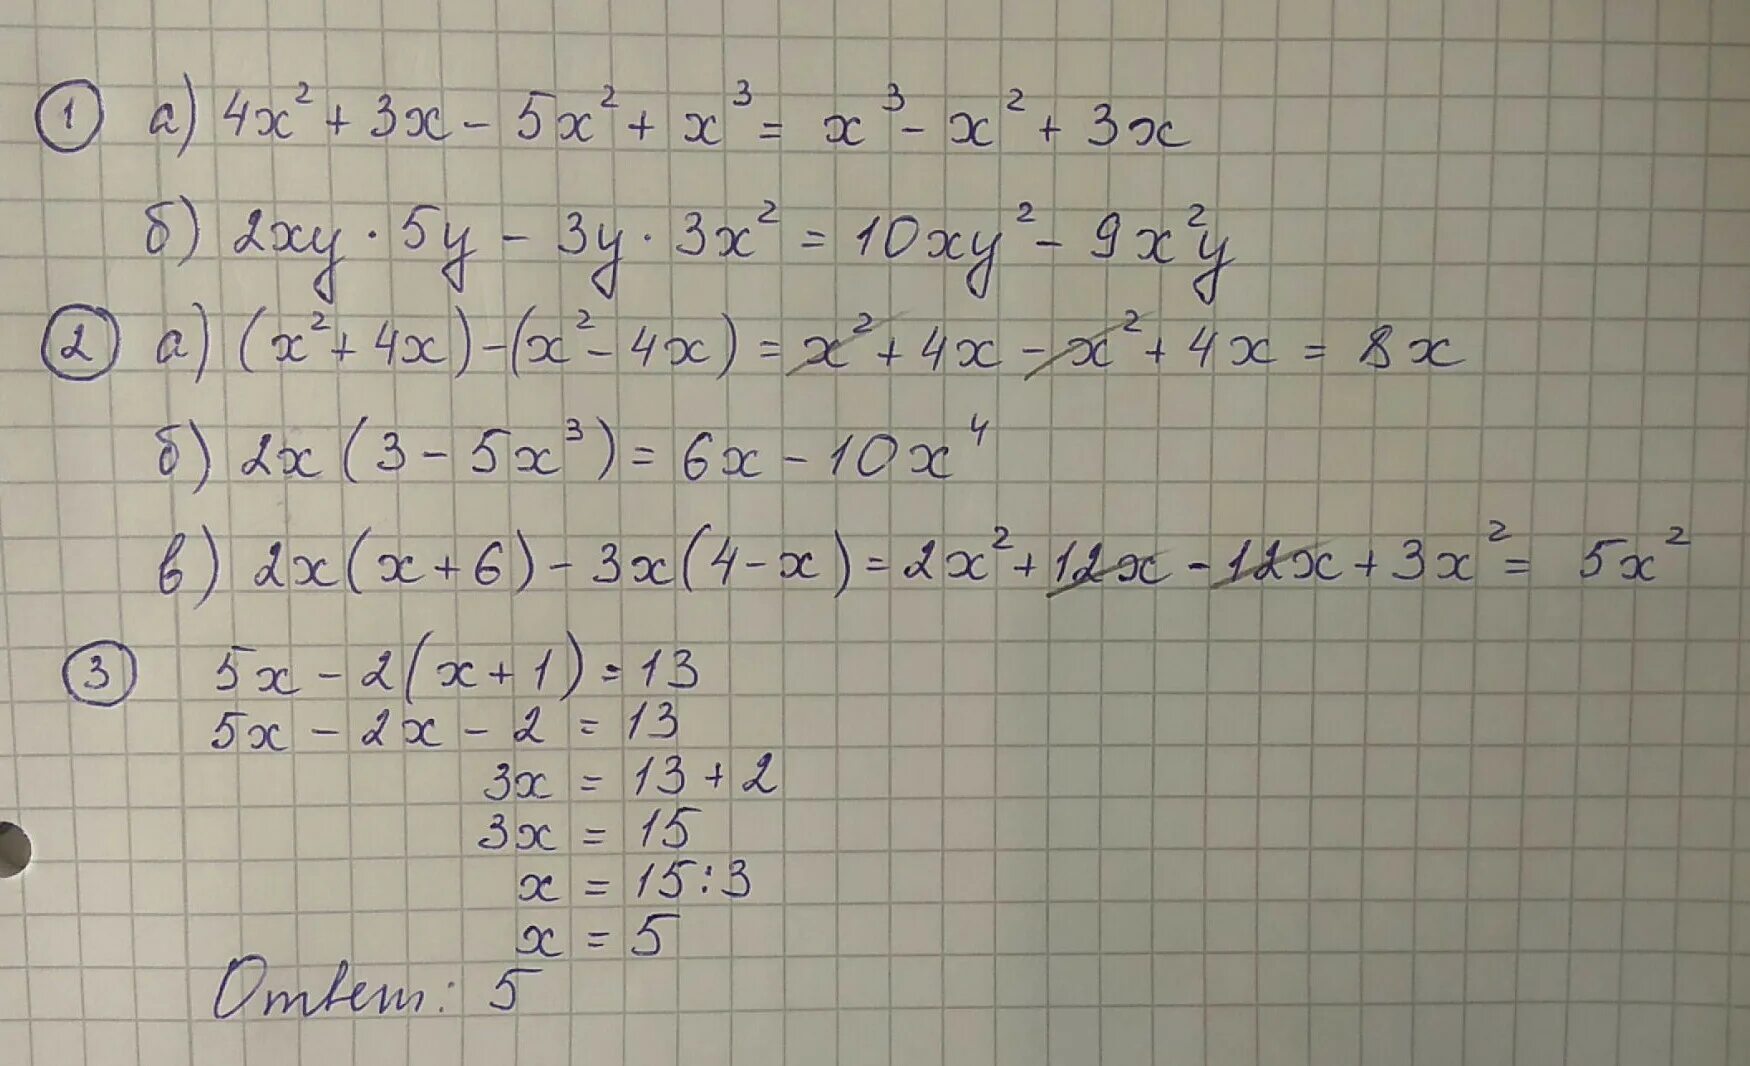 Х 2у 3 3х 2у 5. (5х2 – 3ху -у2) - (*) = х2 + 3ху. Х+2у=5 ху=2. 2ху*5у-3у*3х2. -1.2Ху2 * 6х3у5 с пояснениями.